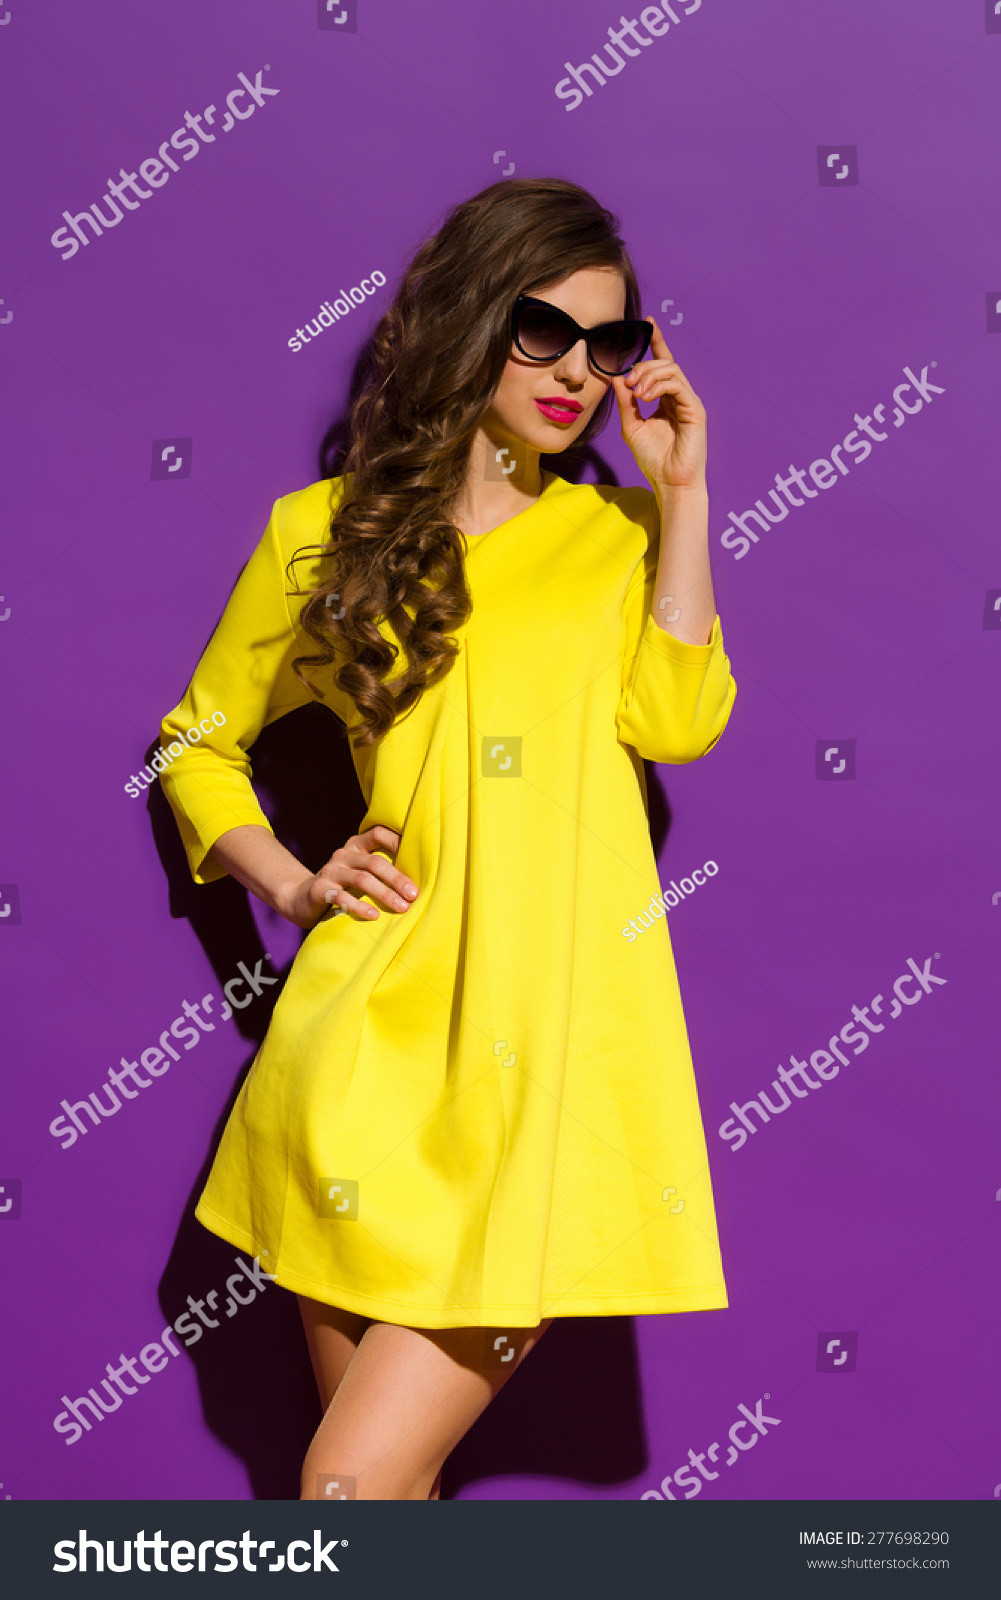 Fashion Model Posing On a Violet Background. Beautiful girl in sunglasses posing in yellow mini dress. Three quarter length studio shot on purple background. #277698290